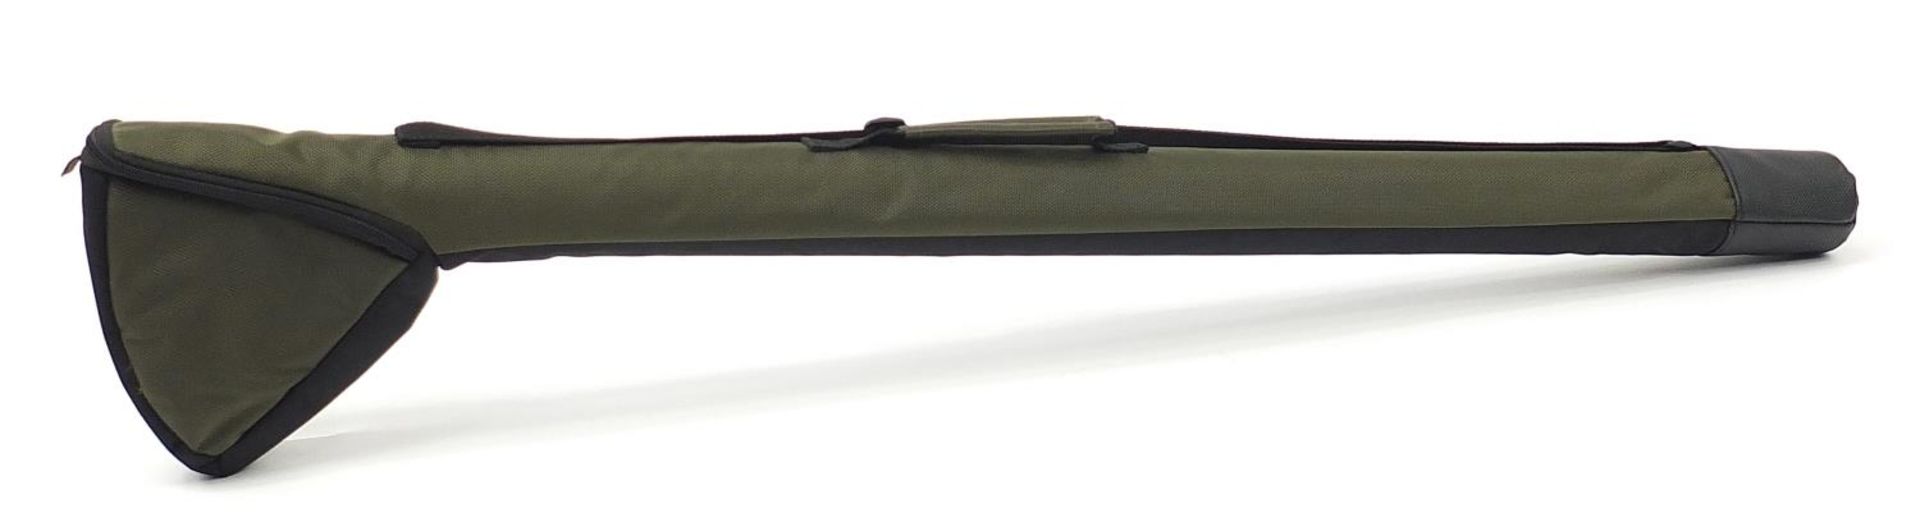 Wychwood match fishing rod case, 103cm in length - Bild 2 aus 2